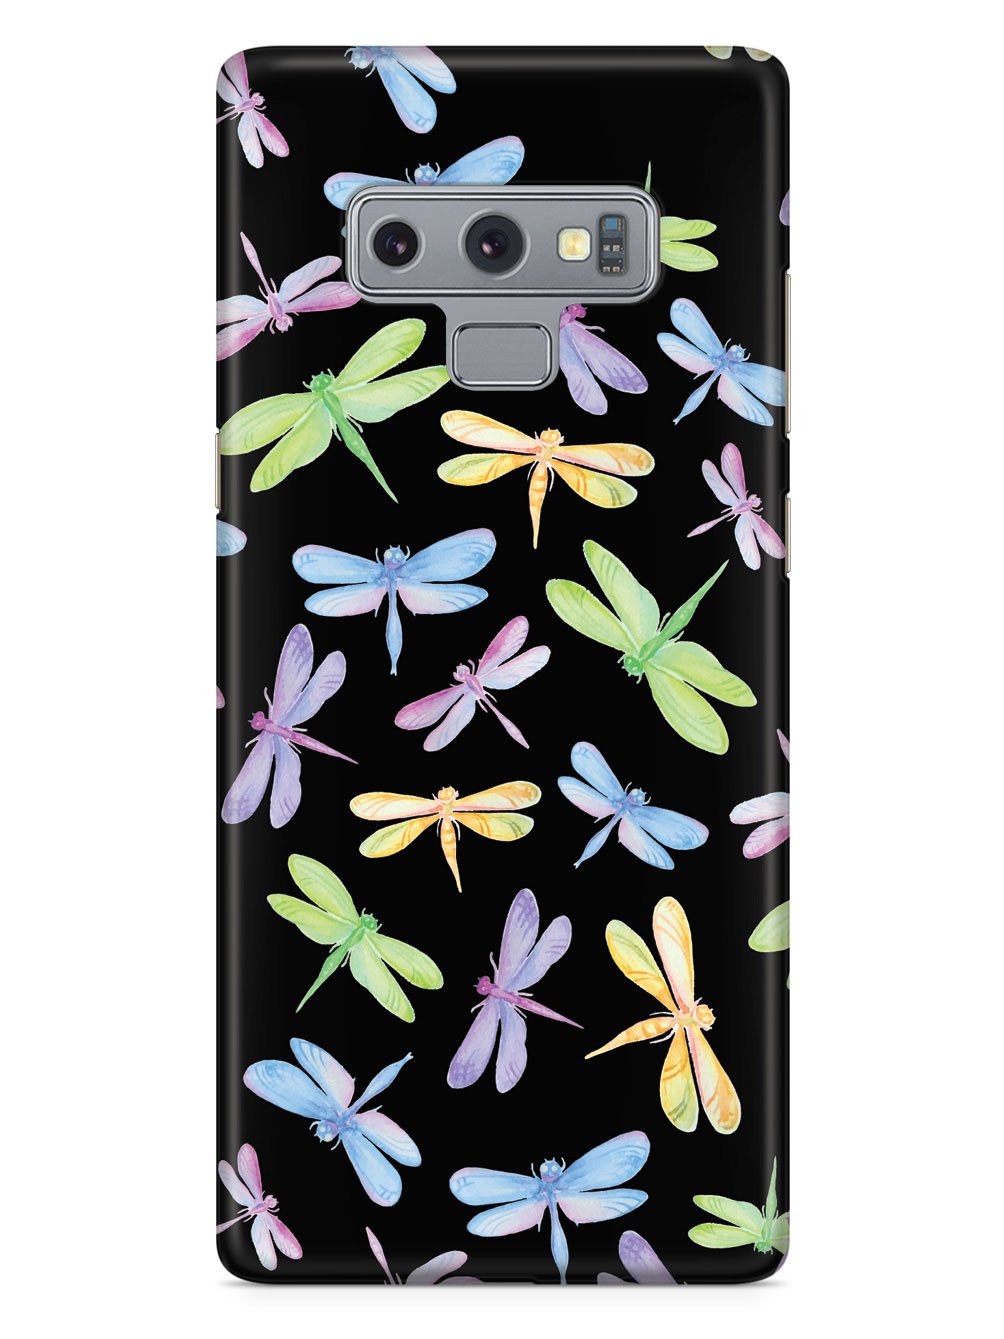 Watercolor Dragonflies Pattern - Black Case